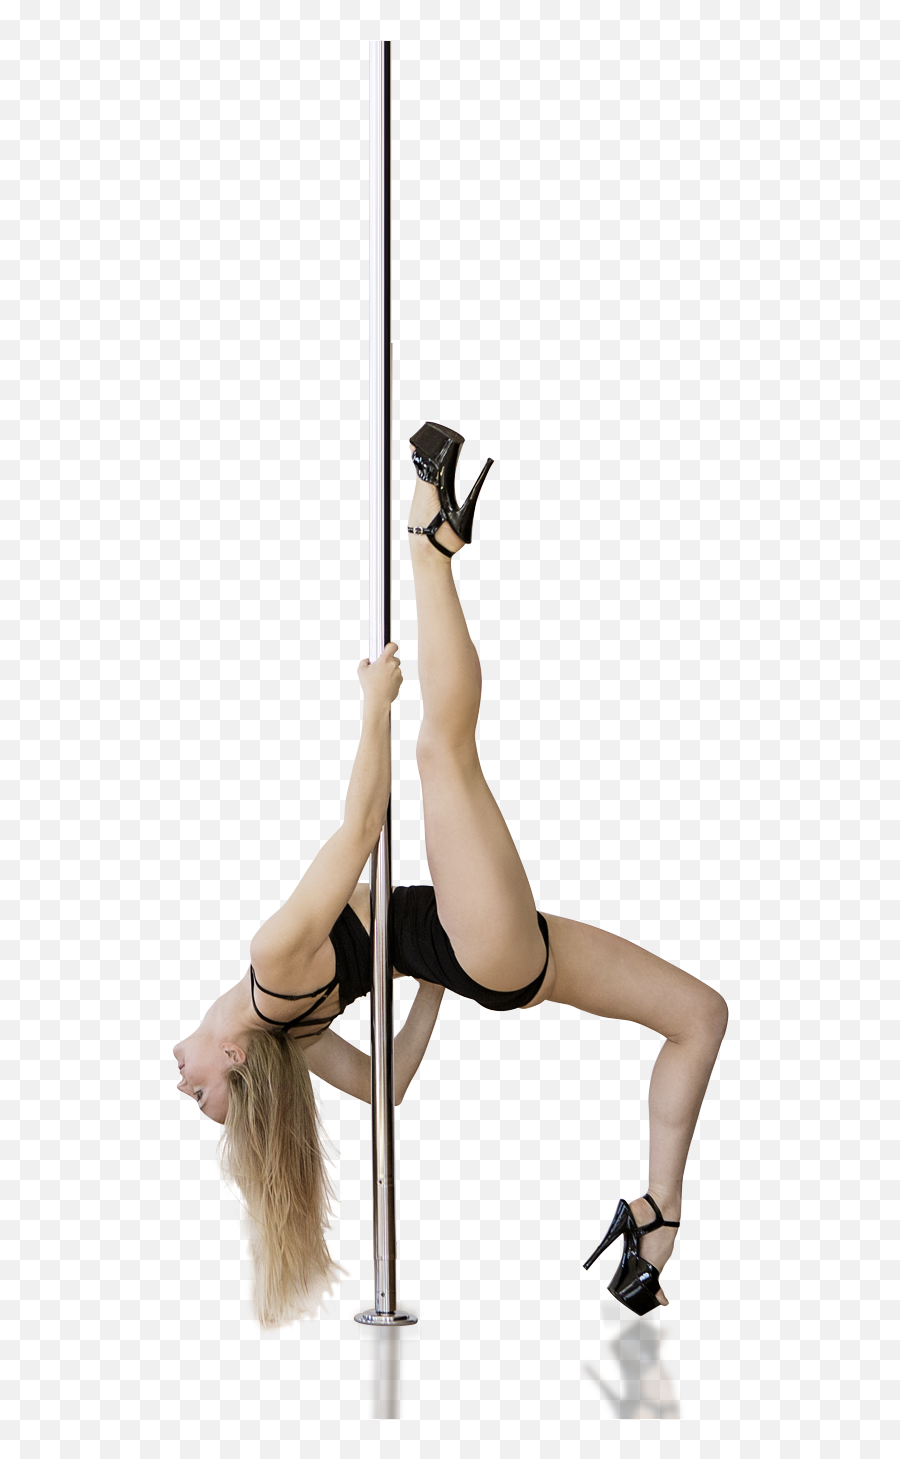 Pole Dance Png Image With No Background - Pole Dance Emoji,Pole Dabcer Emojis